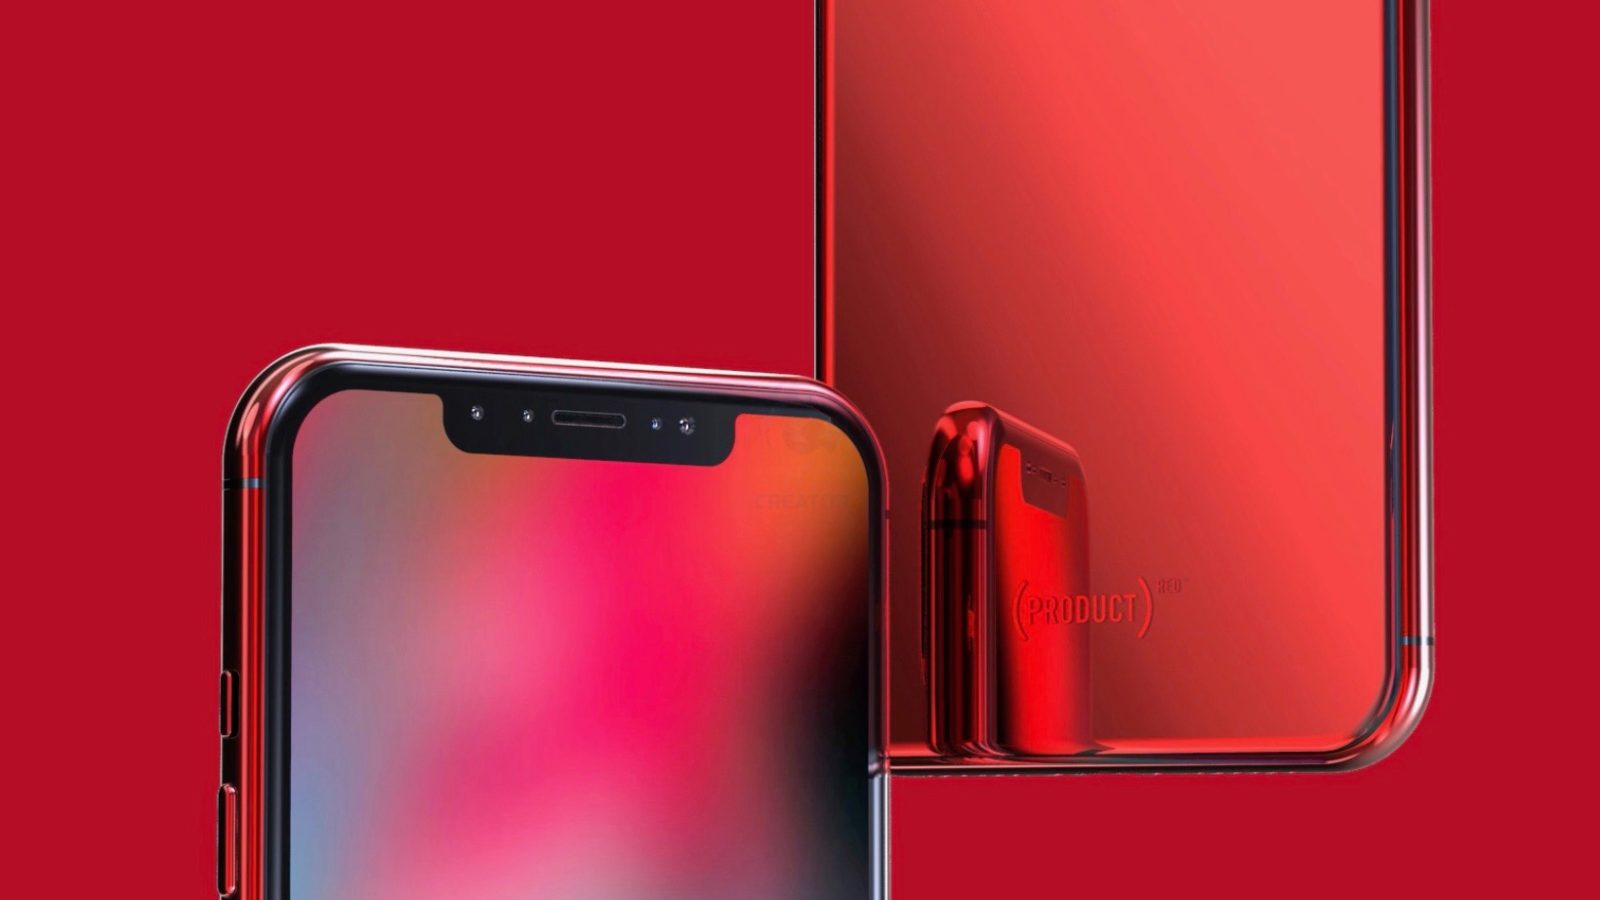 iPhone XS màu đỏ, iPhone XS Max product red, iPhone XS max china red, iPhone XS china red, iPhone 2018 phiên bản đỏ, apple, iphone phiên bản trung quốc, apple news